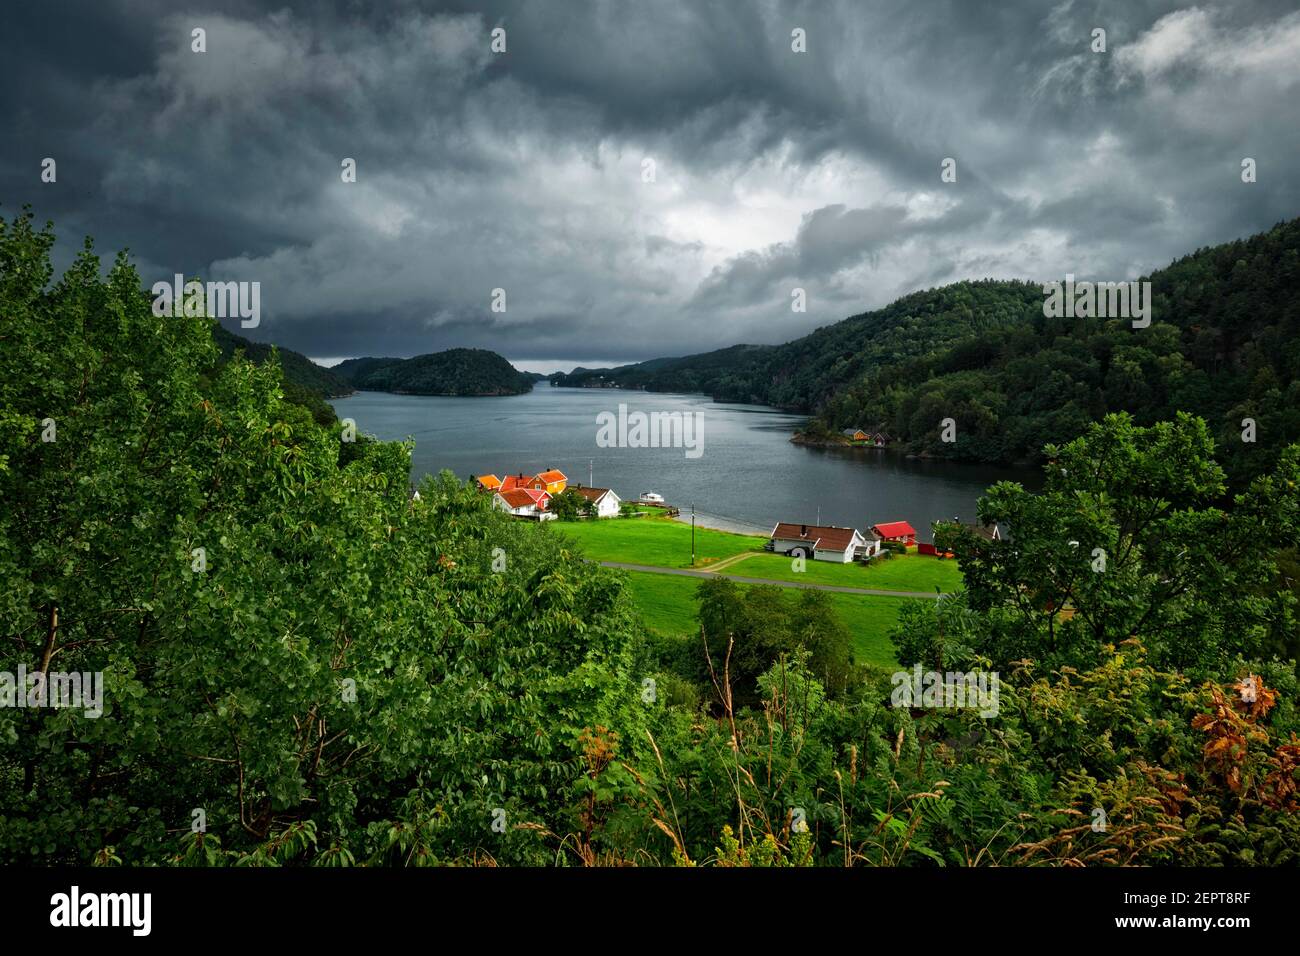 Paisaje imagen sur de Noruega. Foto de stock